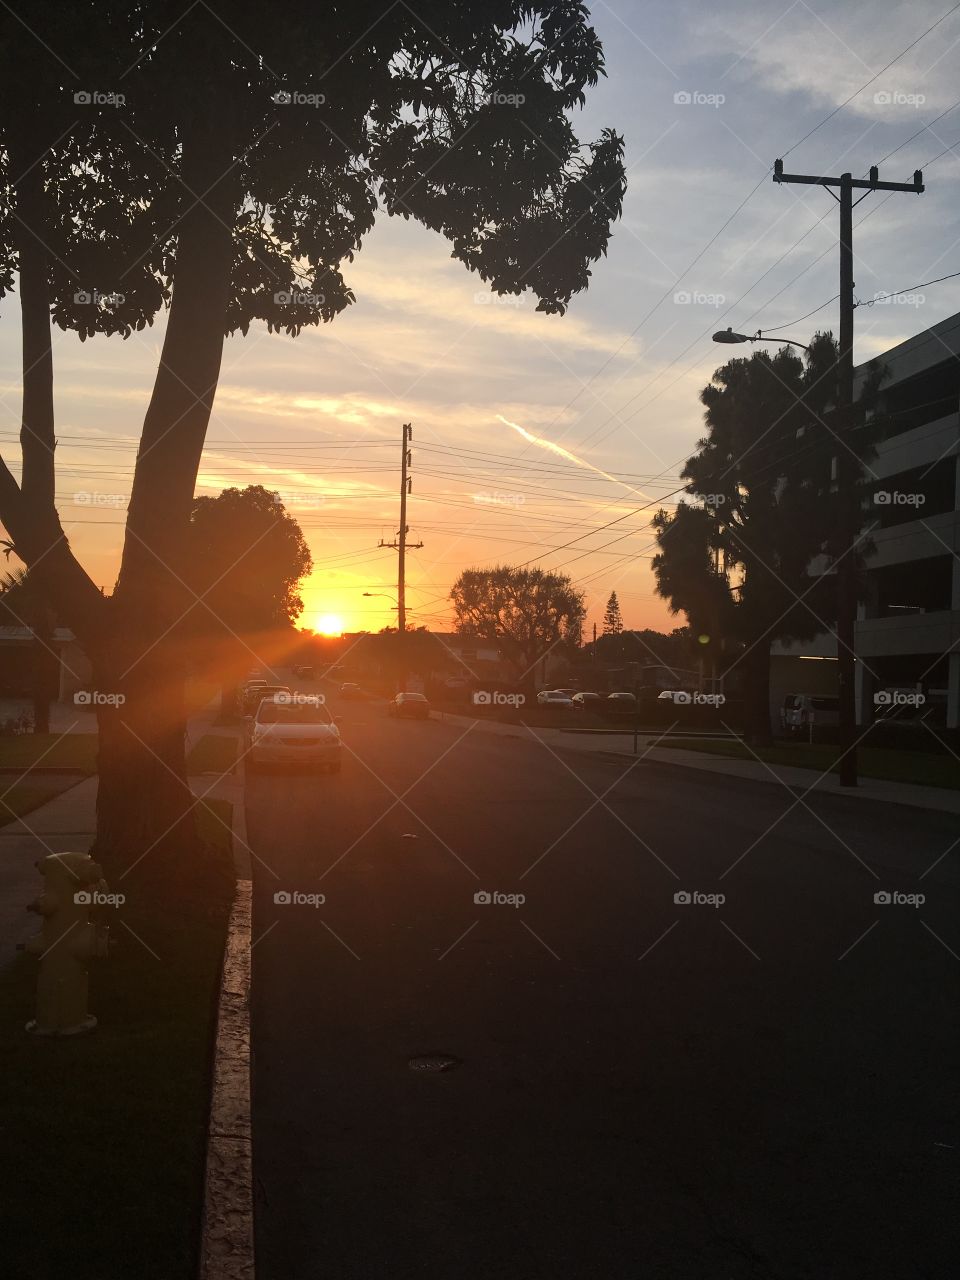 A California sunset 